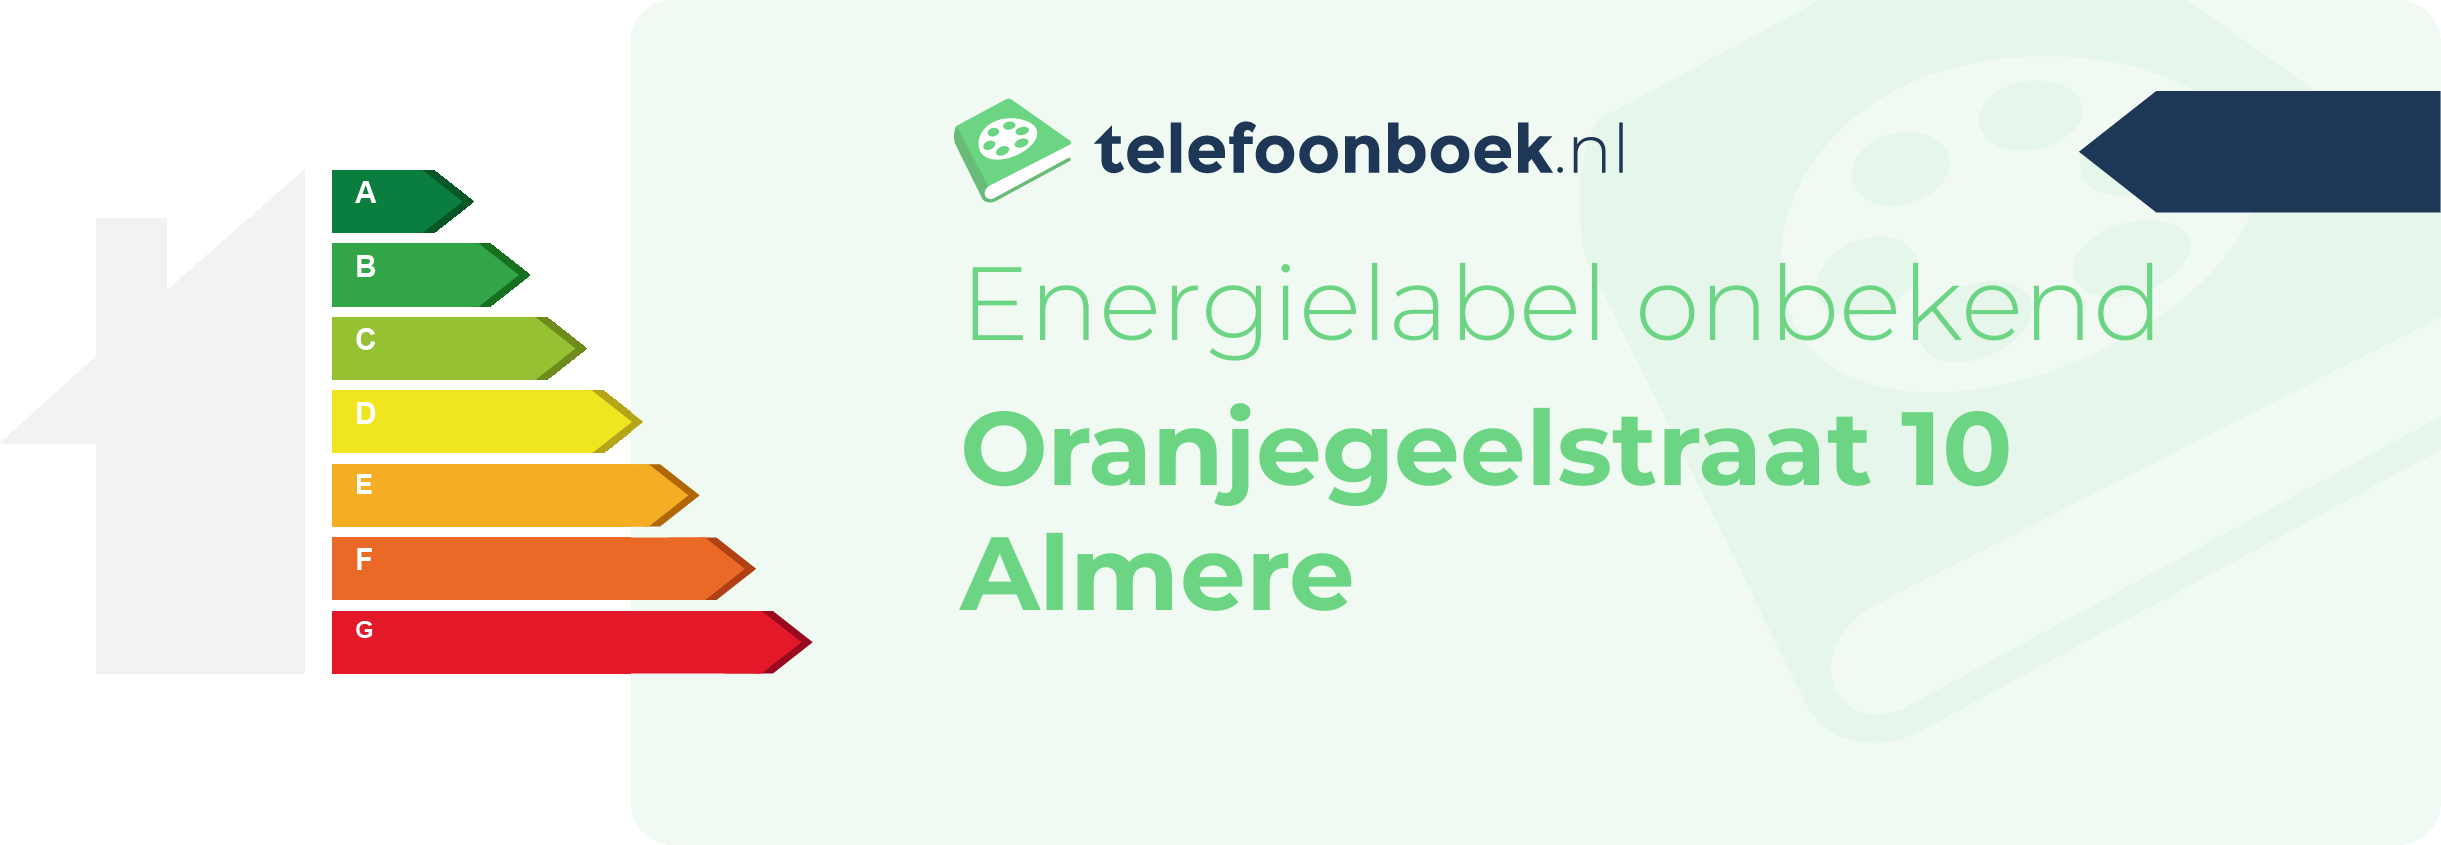 Energielabel Oranjegeelstraat 10 Almere